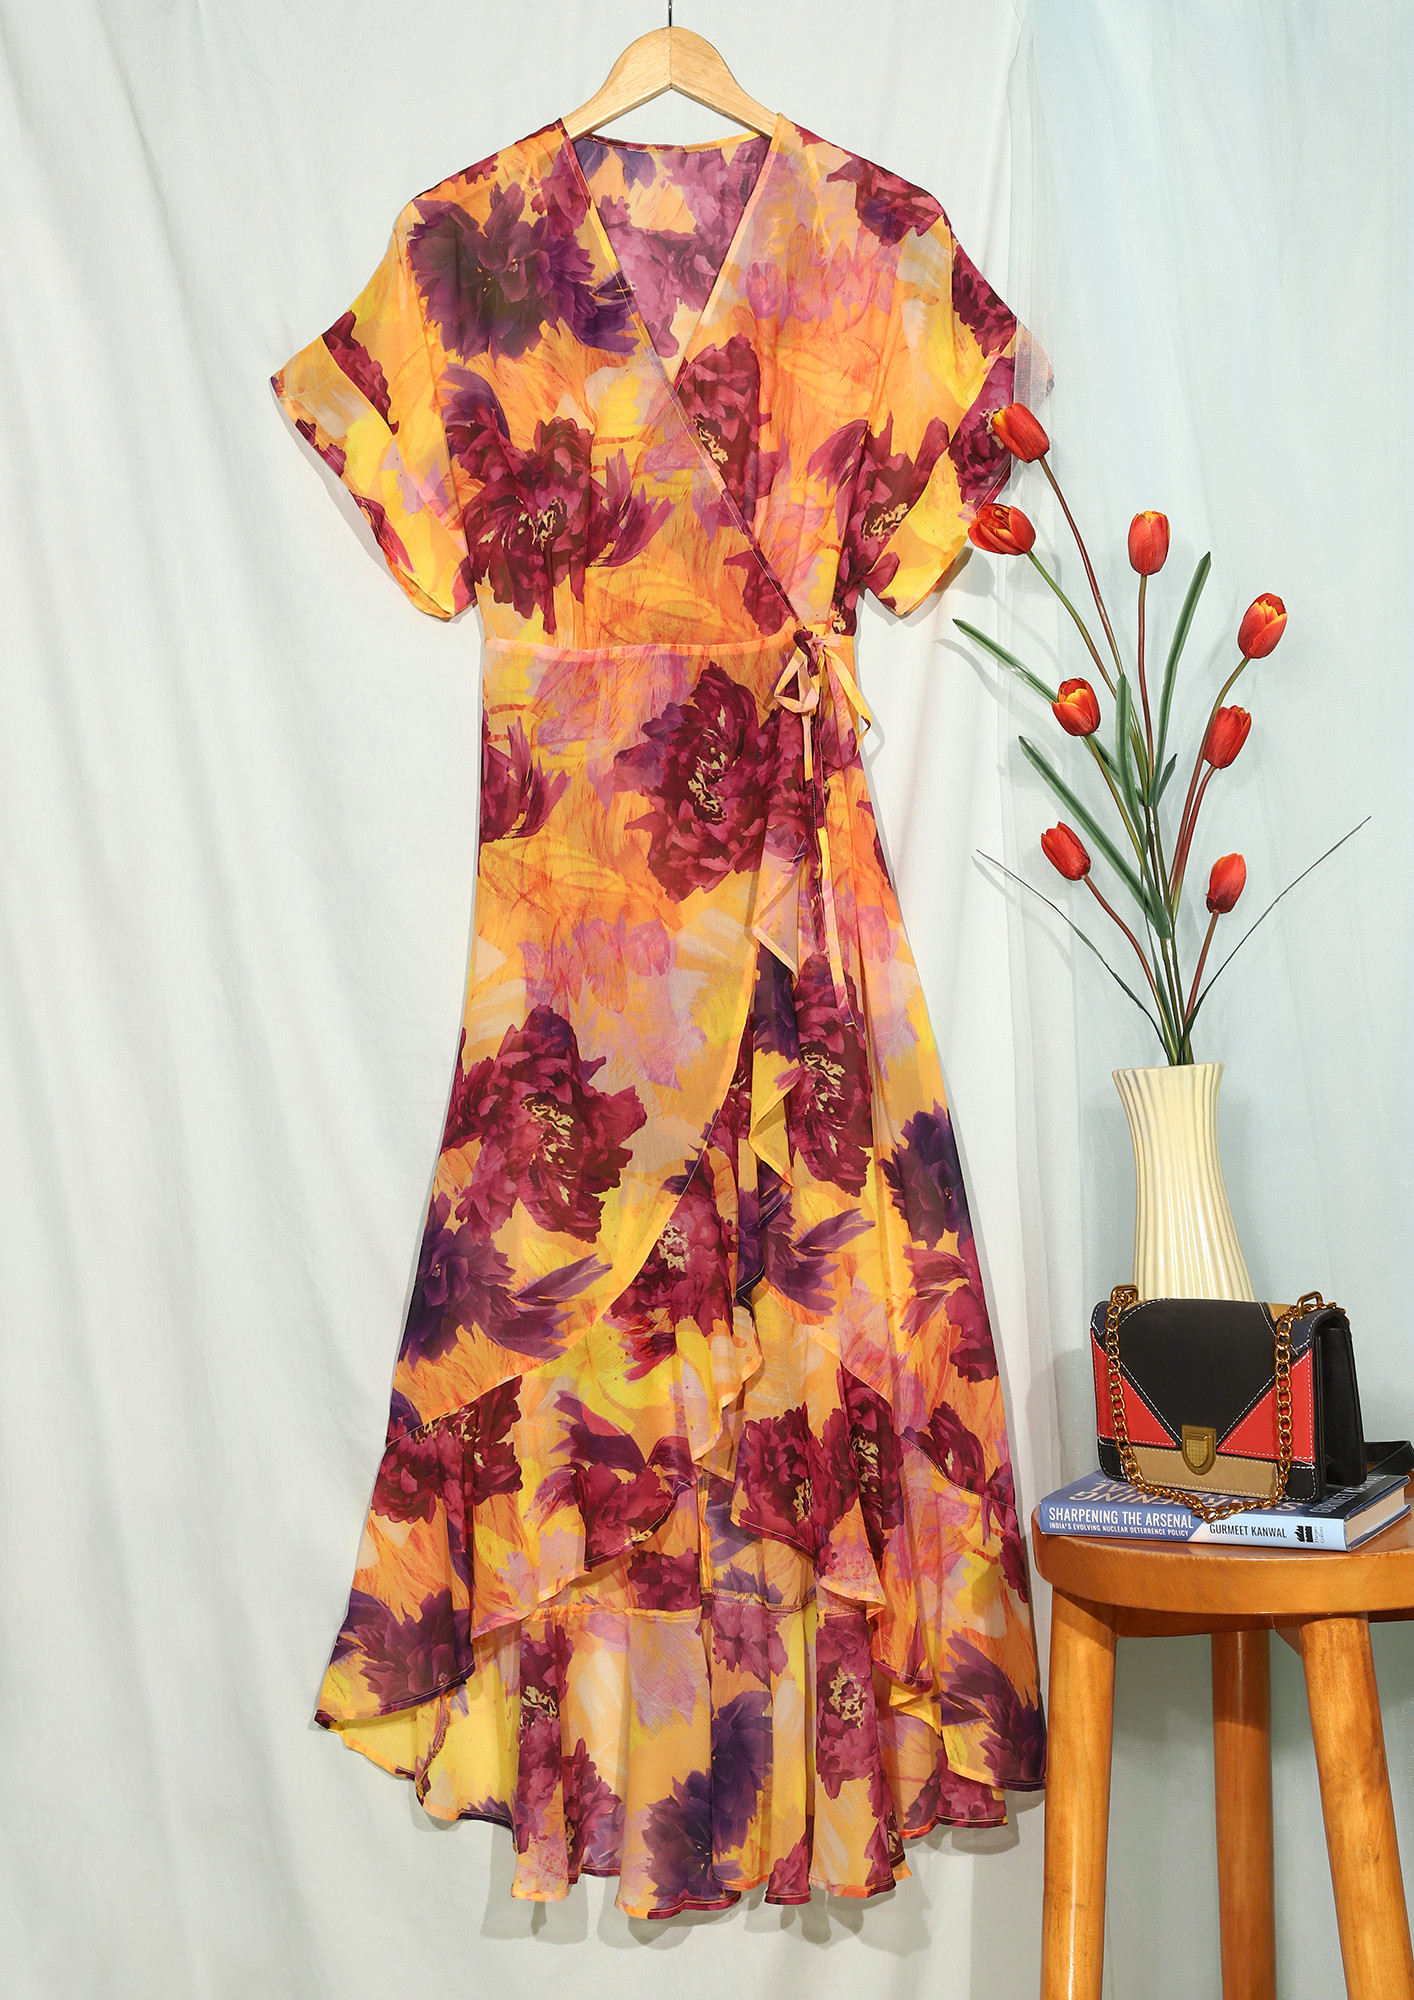 ASOS DESIGN ruffle detail wrap satin maxi dress in large bold floral print